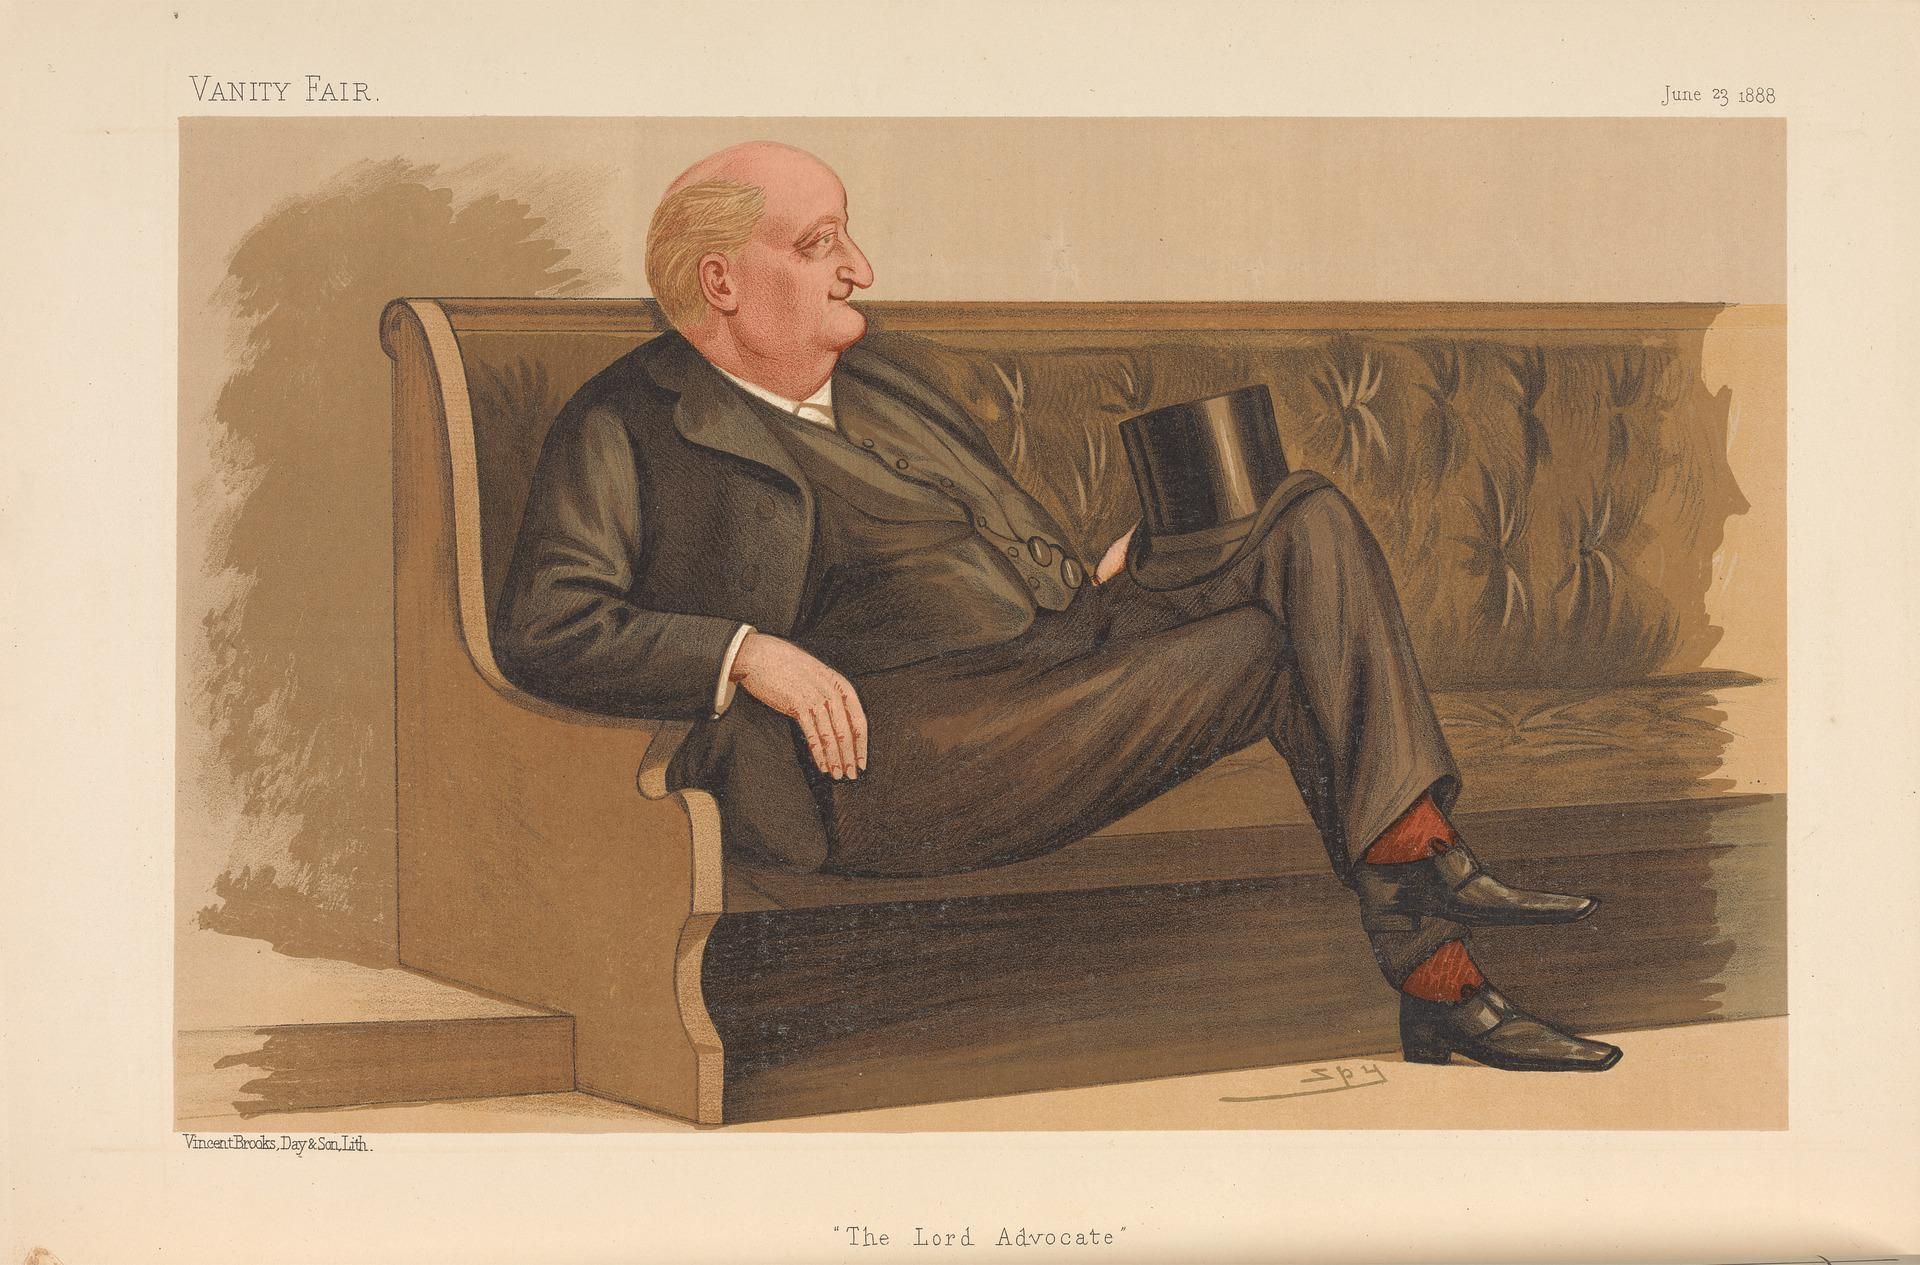 Vanity Fair: Legal; 'The Lord Advocate', John Hay Athole MacDonald, June 23, 1888